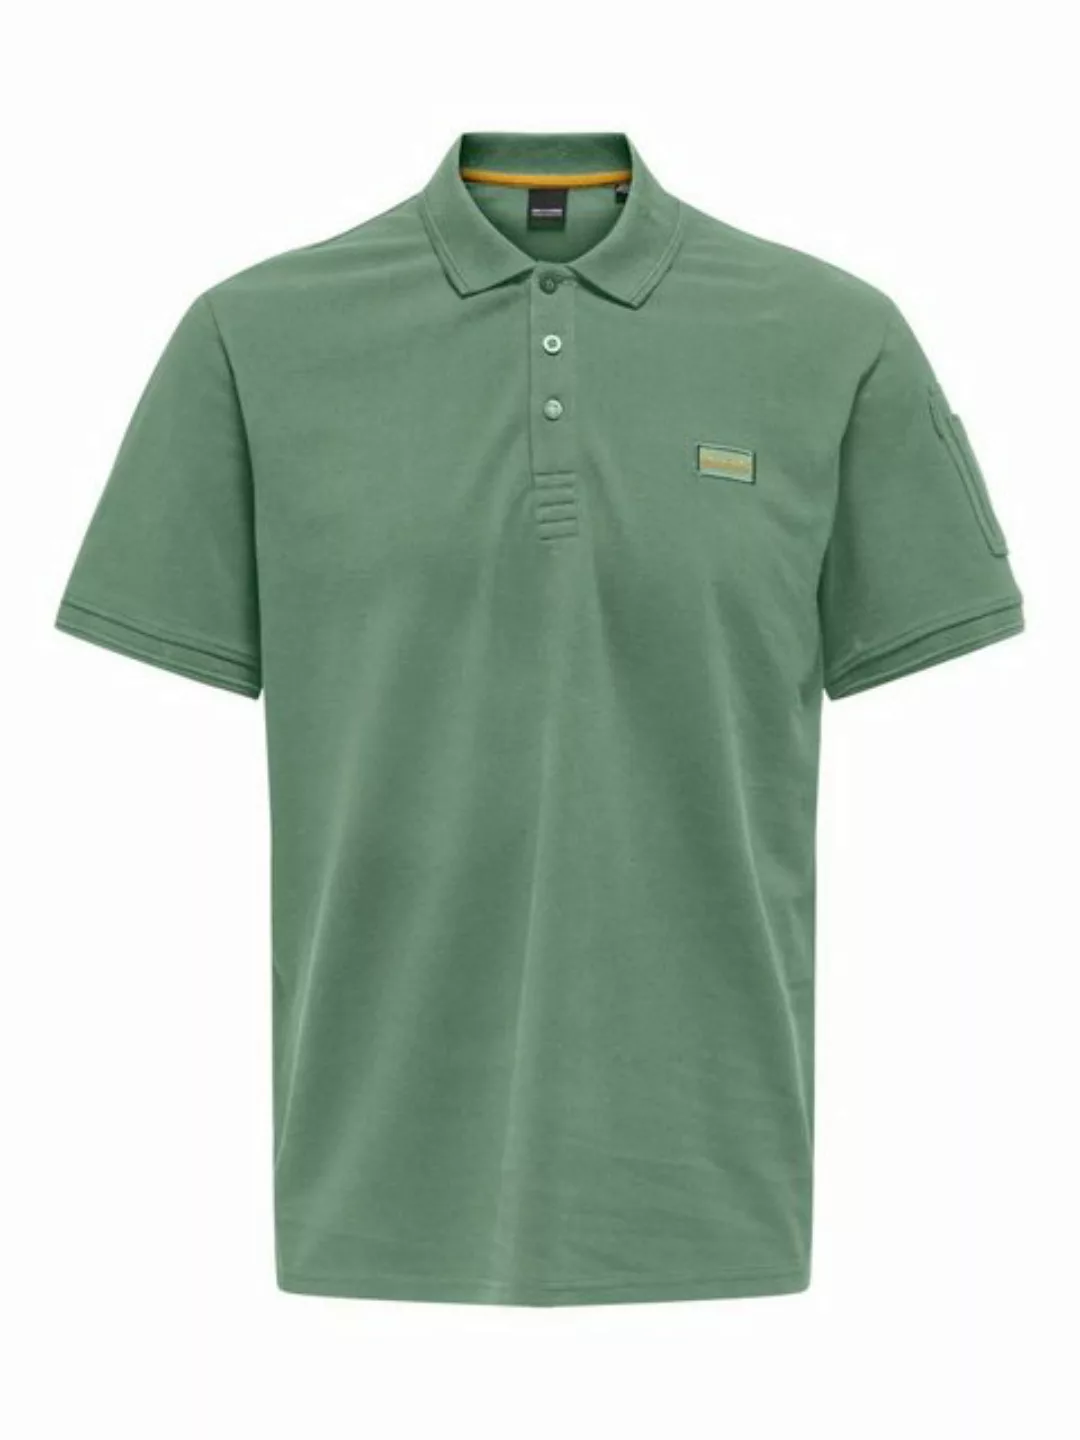 ONLY & SONS Poloshirt Poloshirt Kurzarm Polokragen Baumwolle Hemd 7636 in G günstig online kaufen